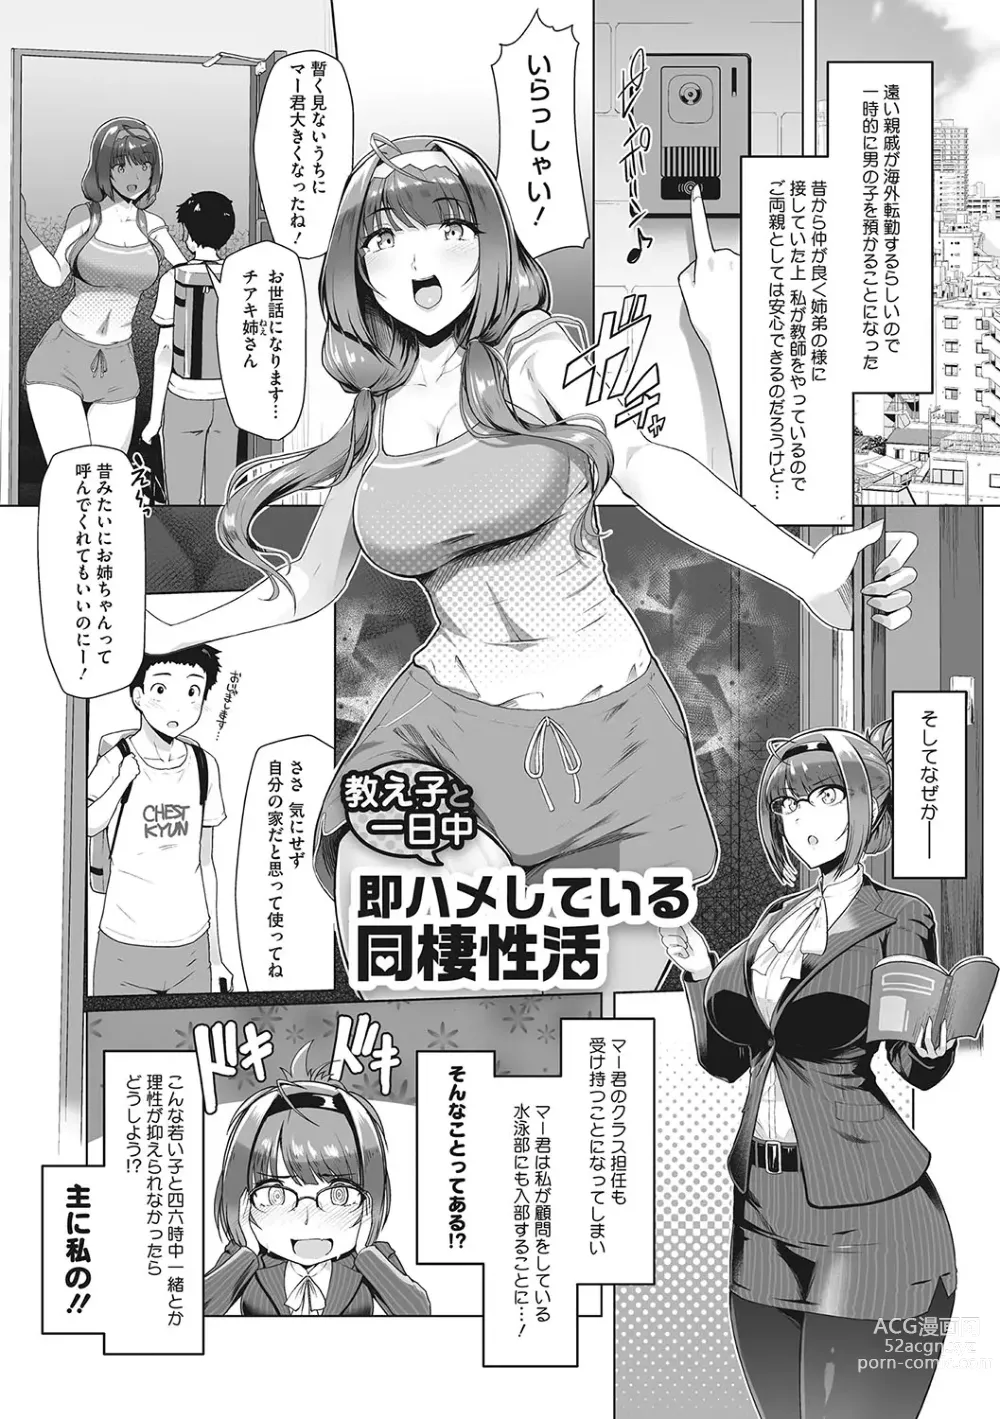 Page 10 of manga Kyouei Frustration